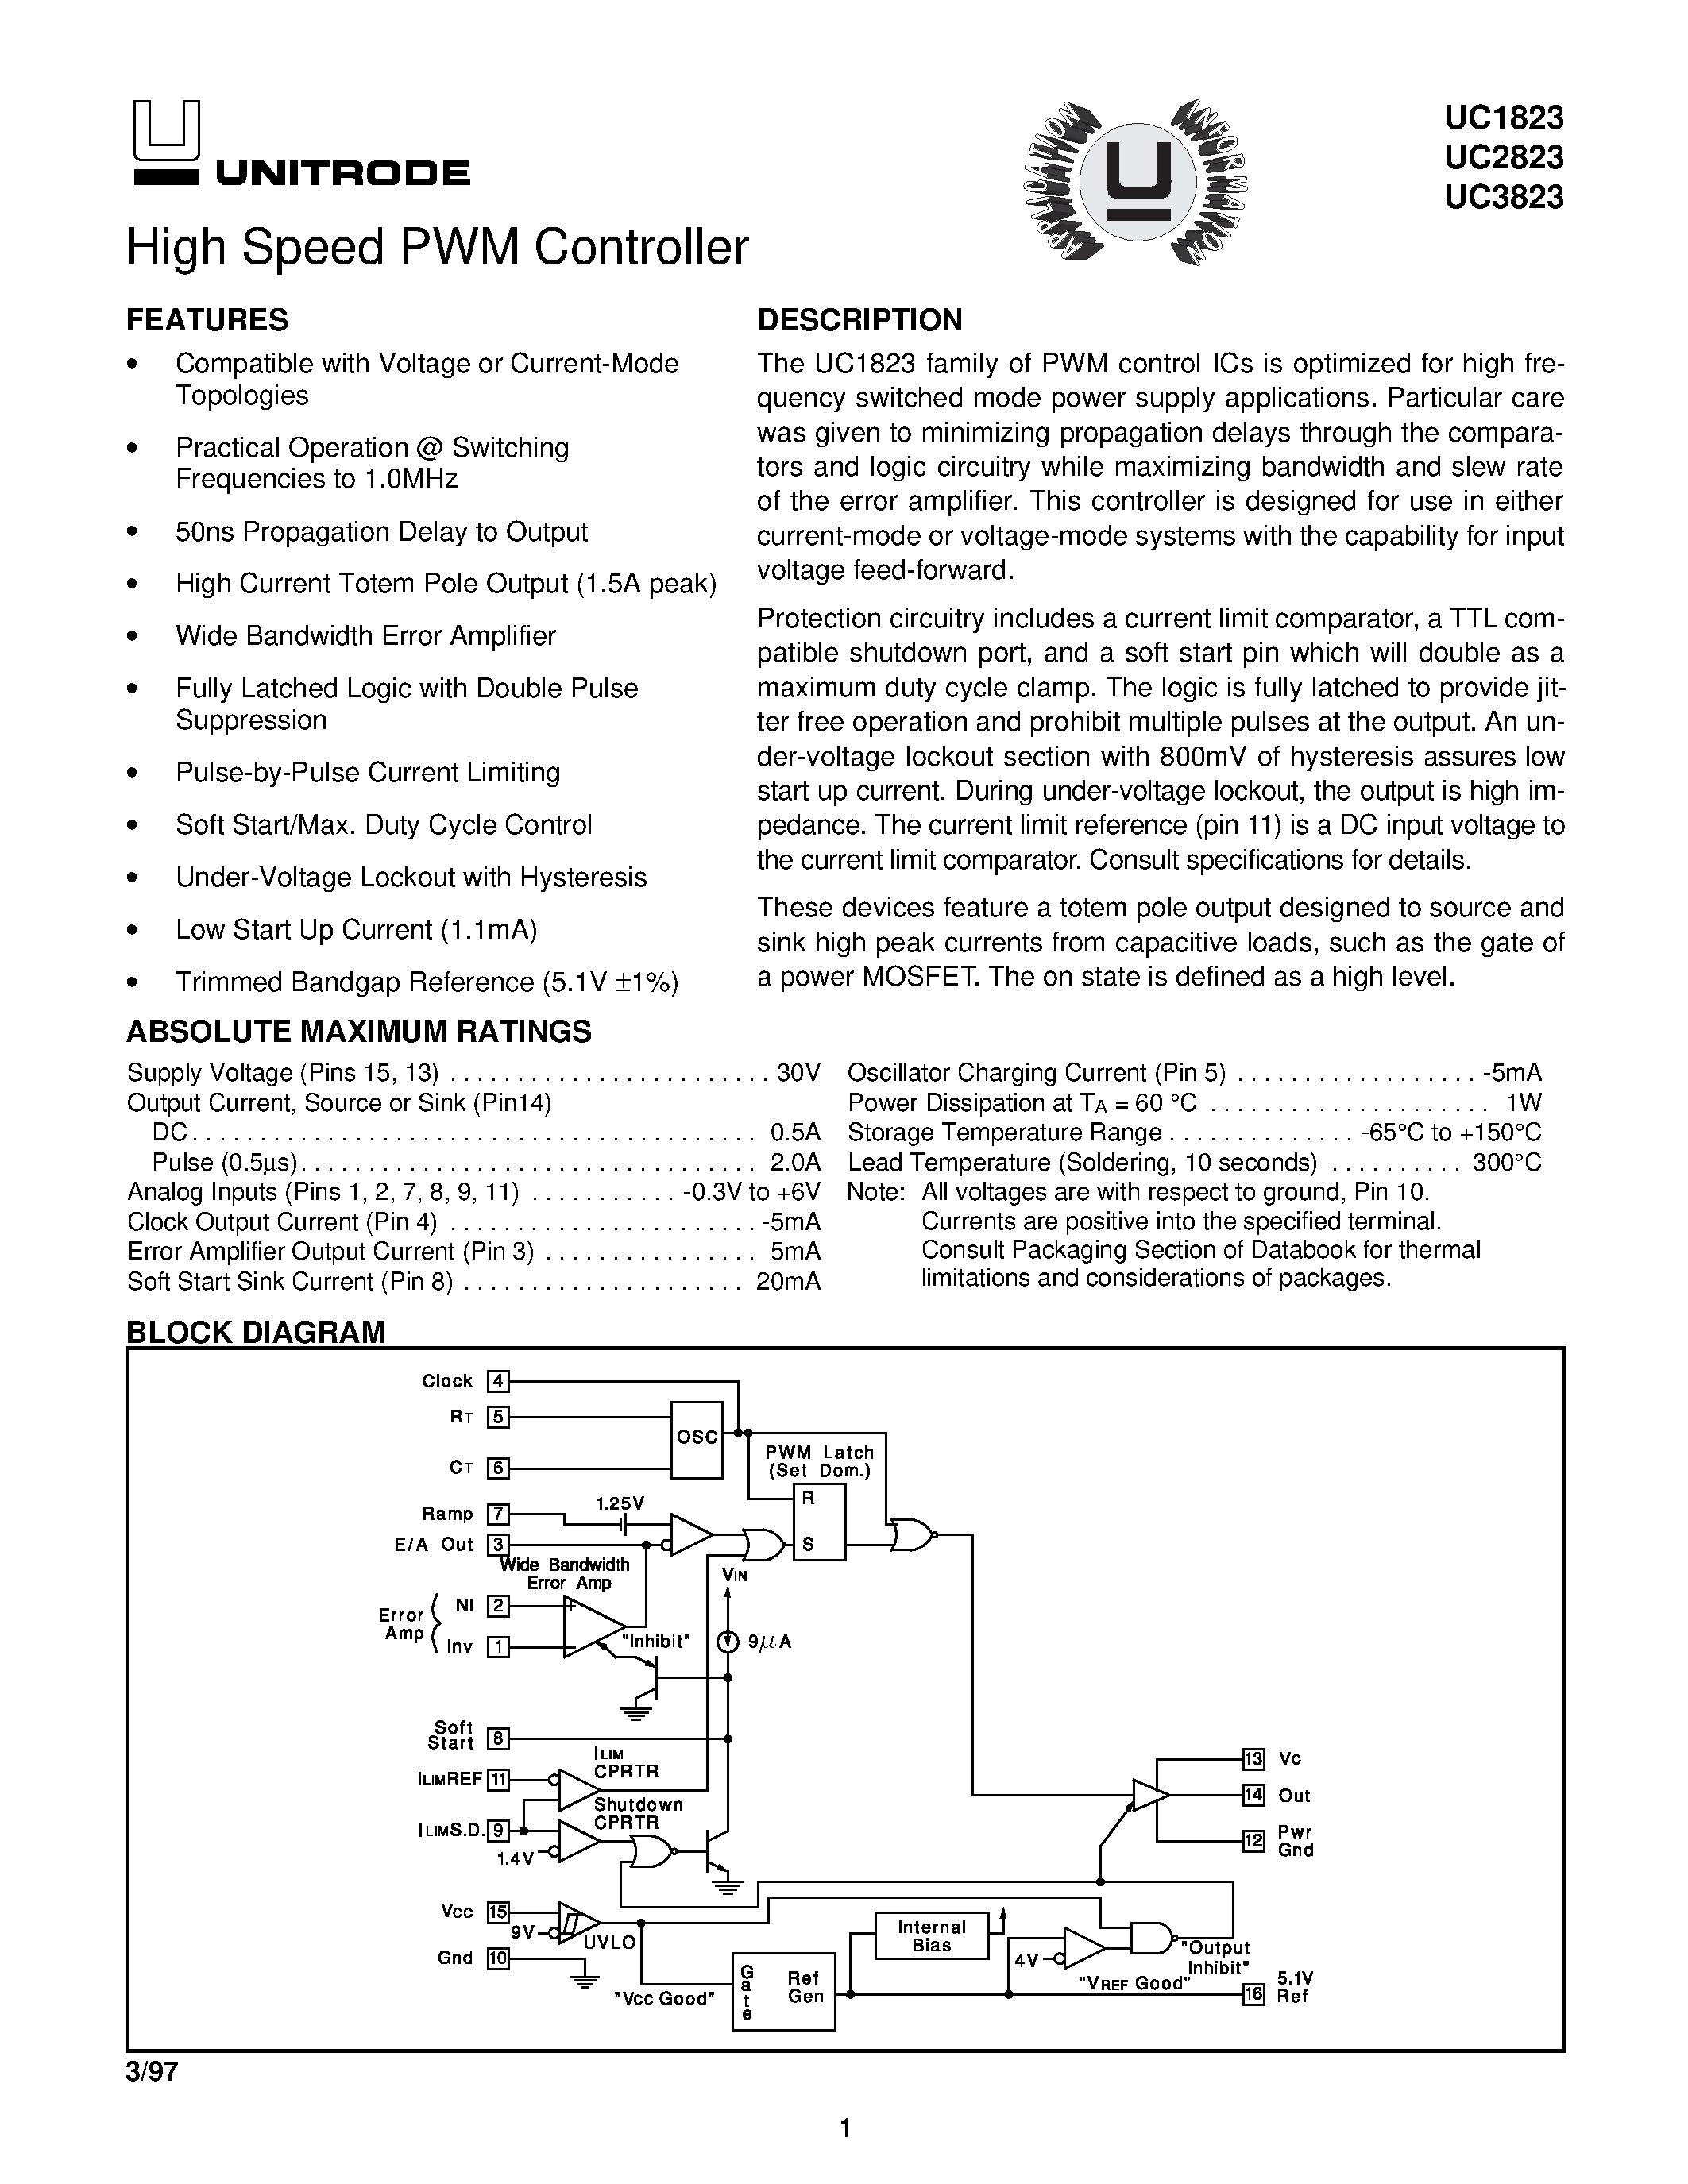 Datasheet UC2823 - High Speed PWM Controller page 1